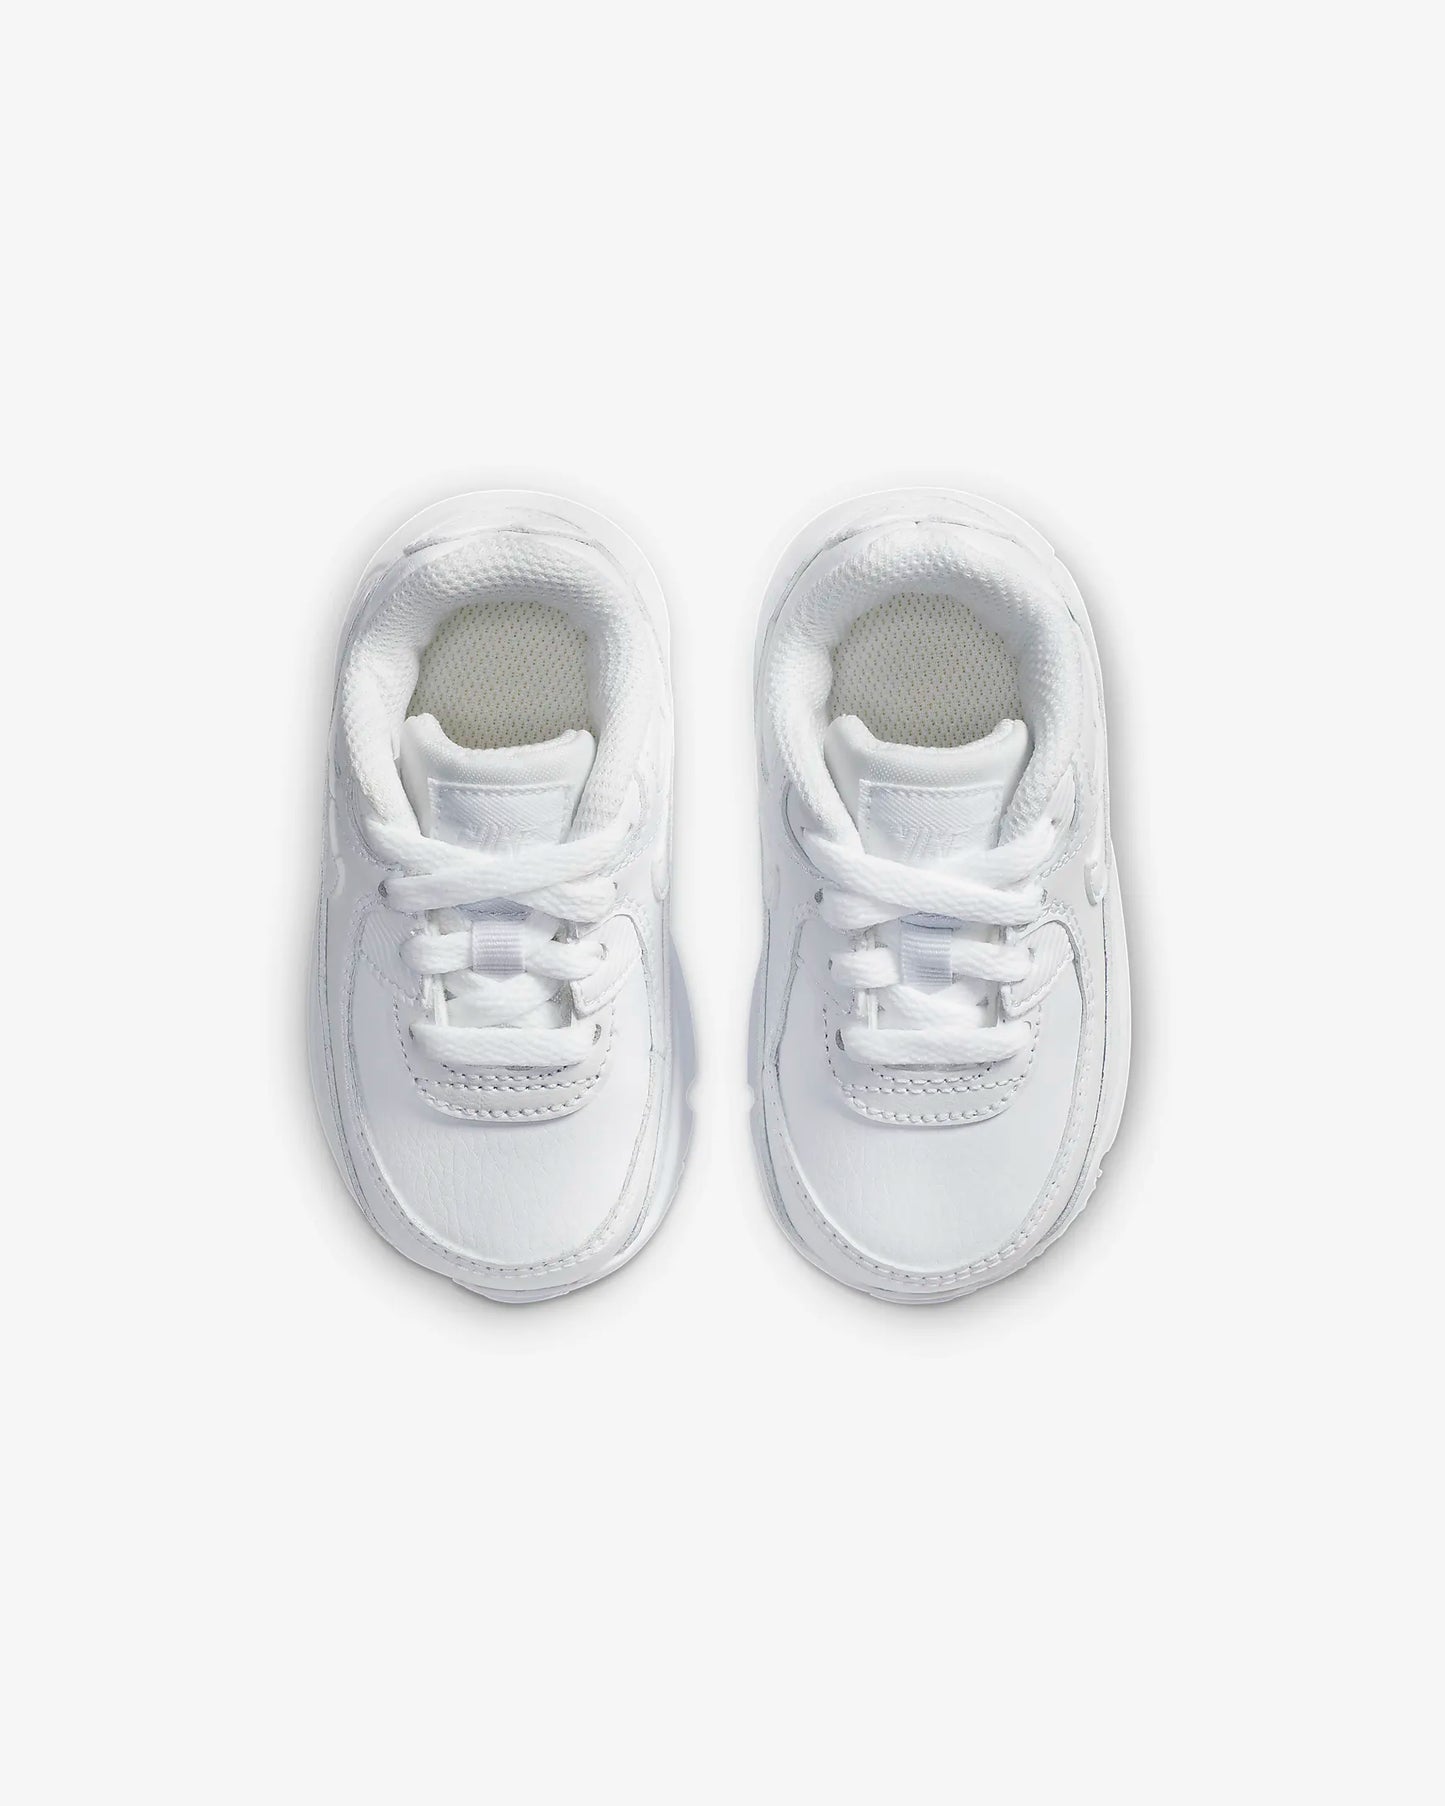 Zapatillas para bebé Nike Air Max 90 LTR